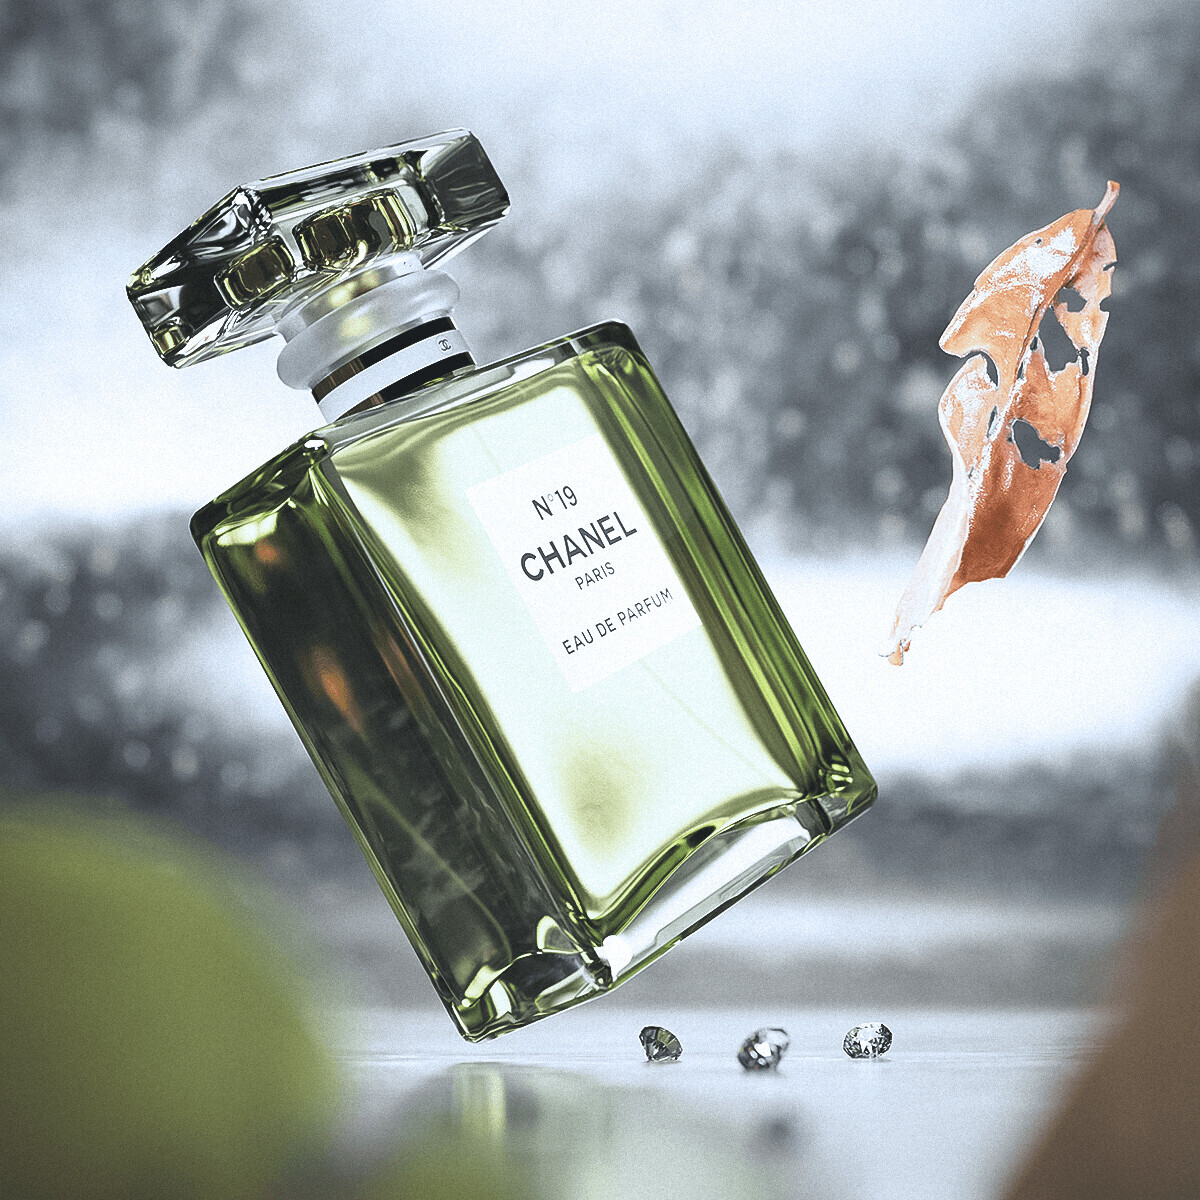 3D Chanel No 5 Perfume Bottle model - TurboSquid 1864797